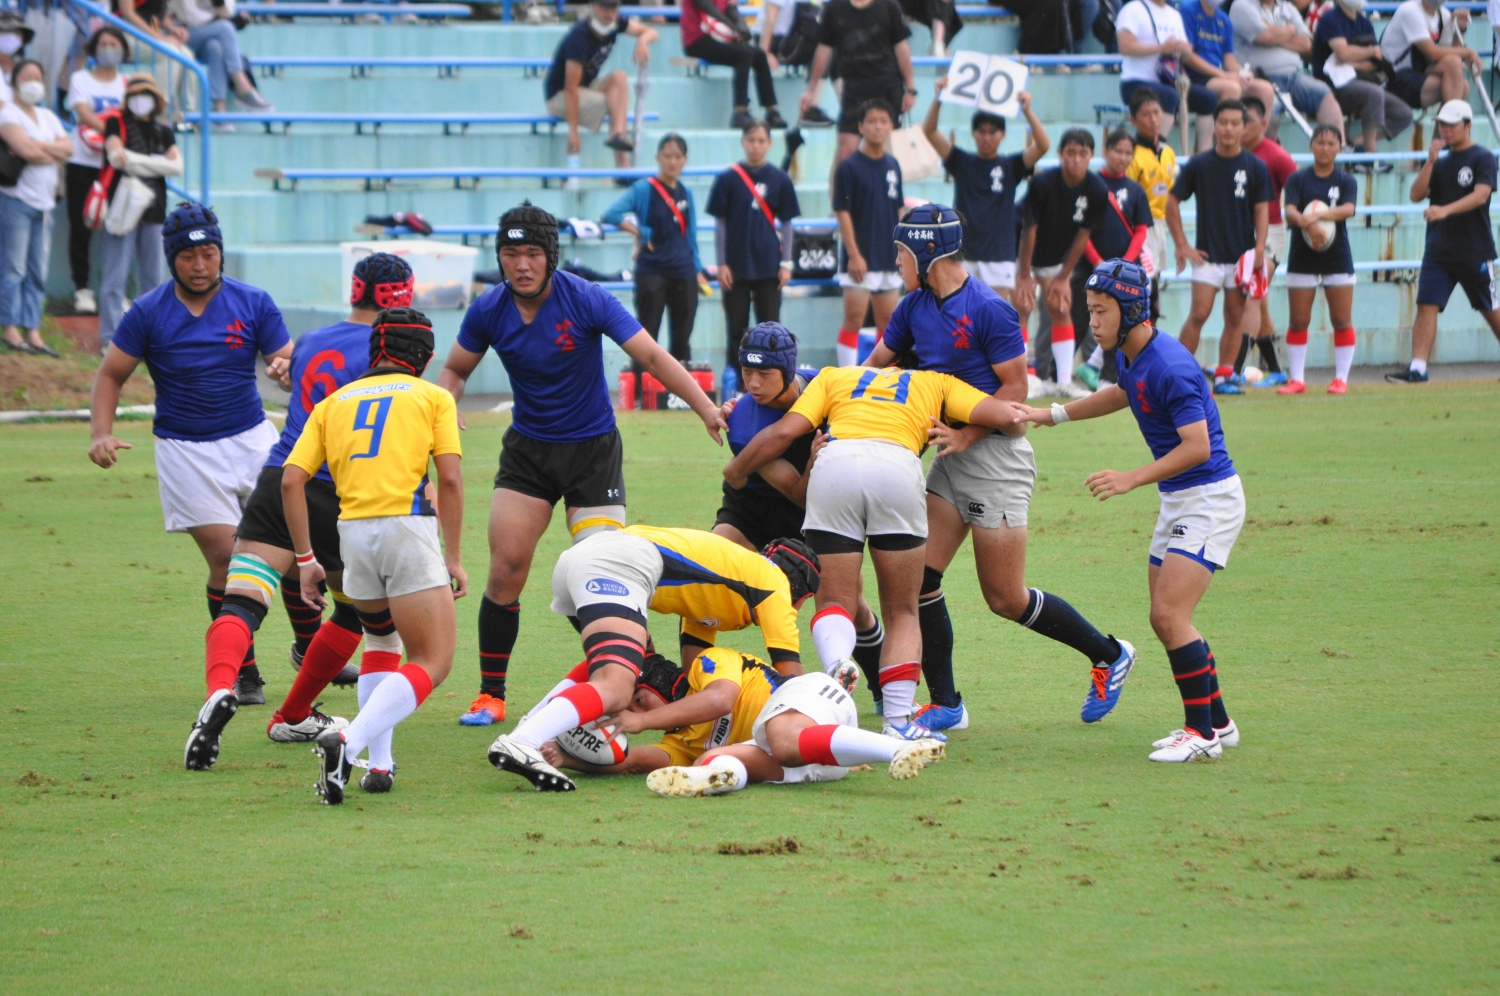 http://kokura-rugby.sakura.ne.jp/DSC_0856_xlarge.JPG